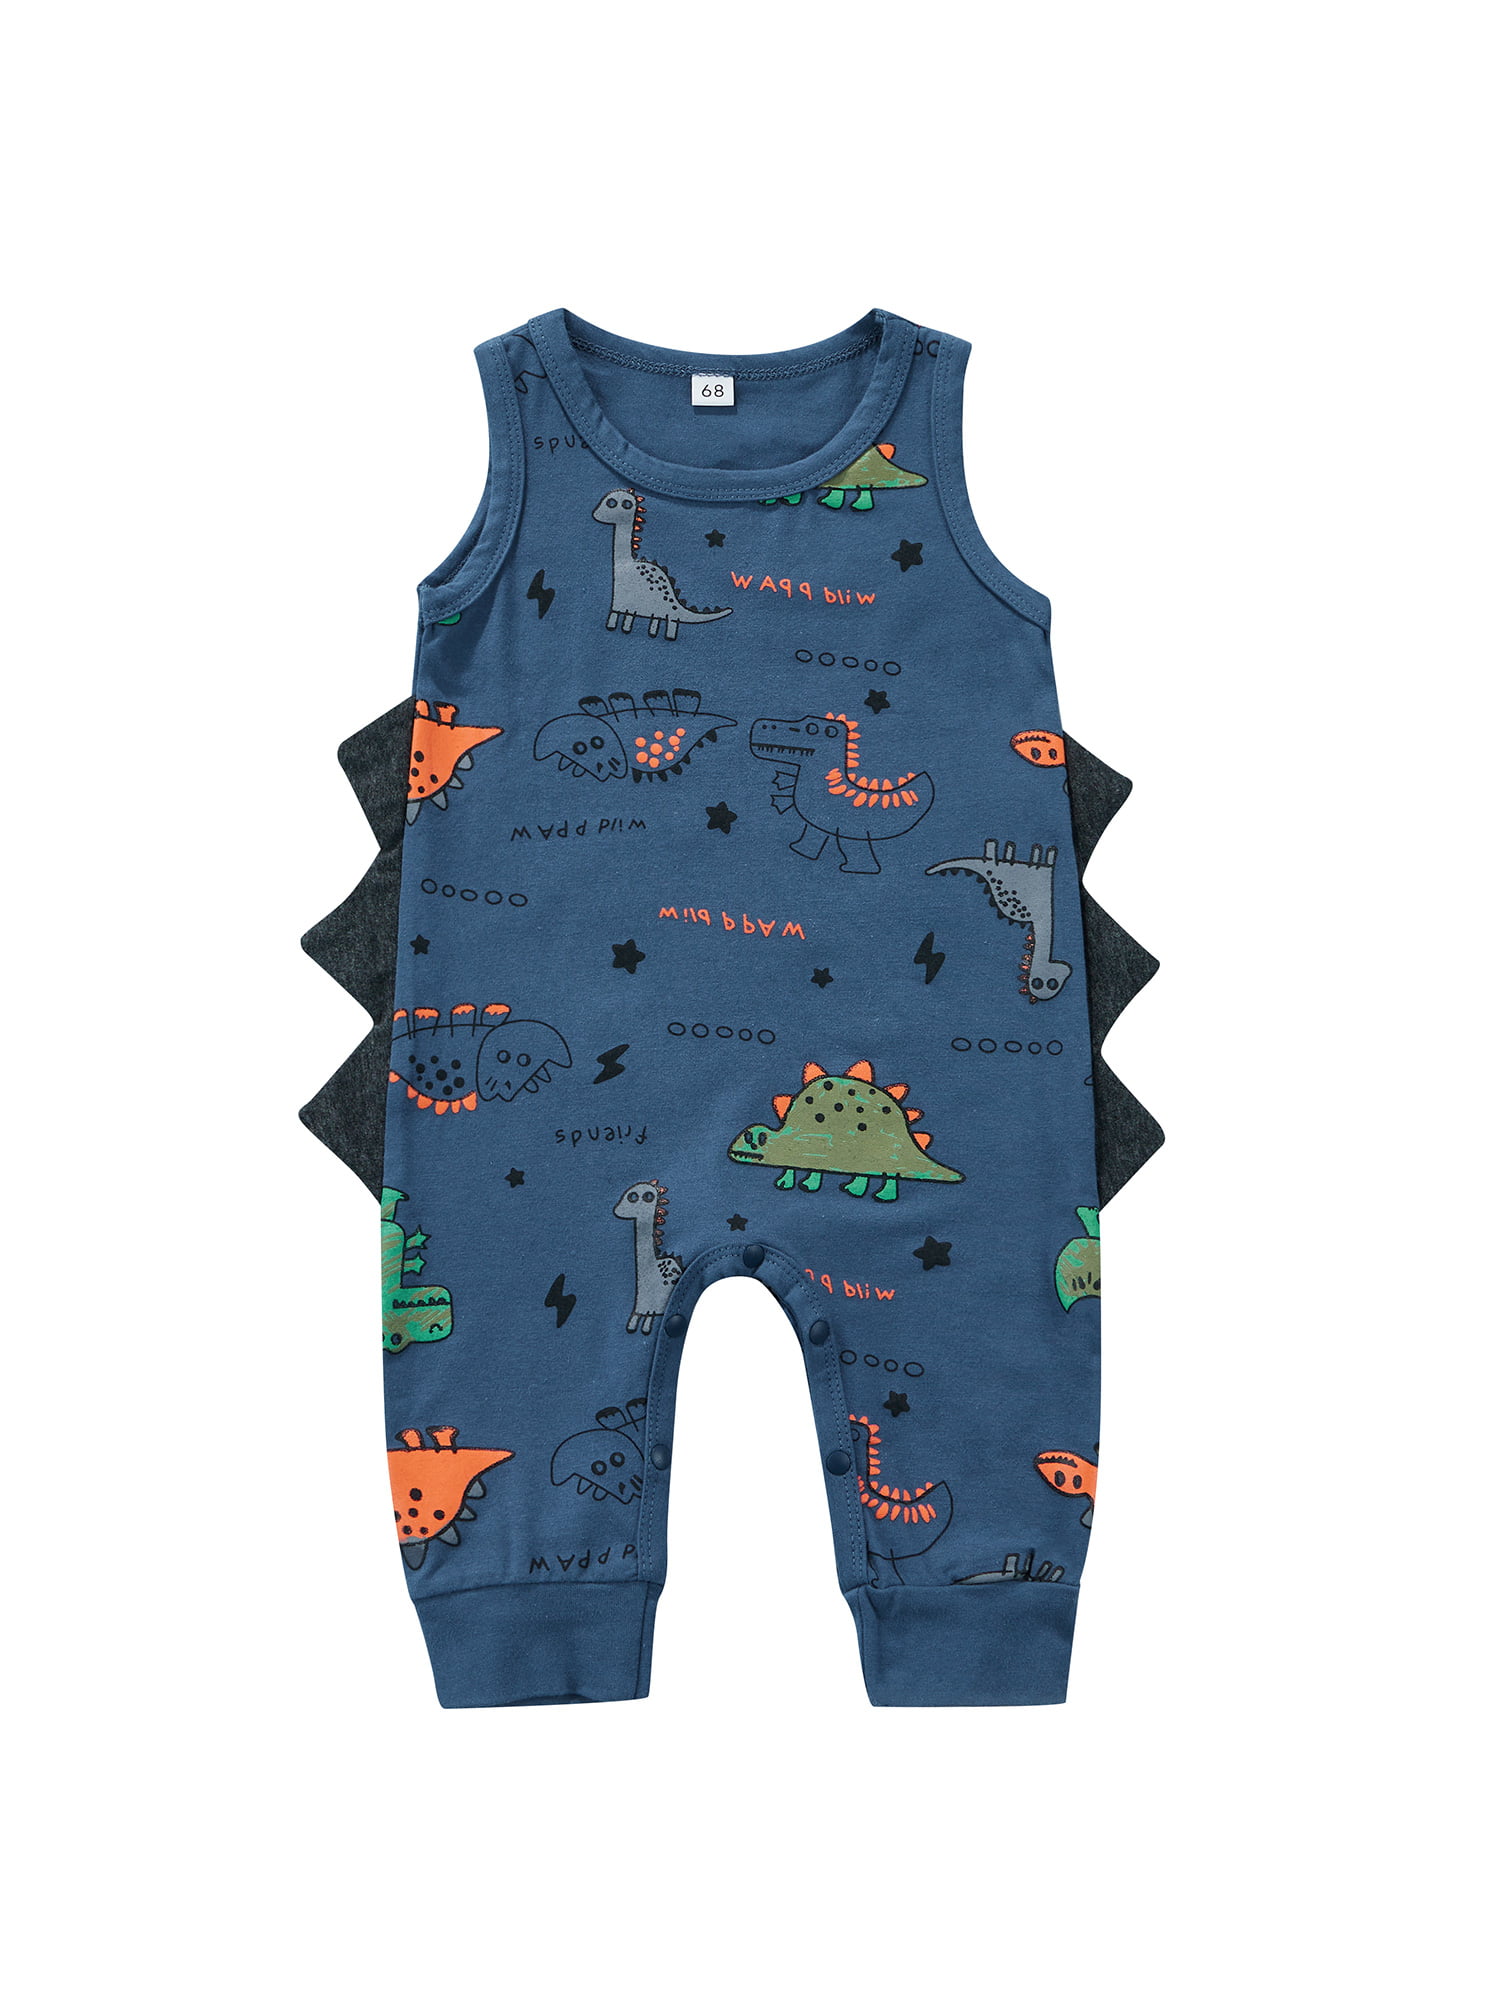 Felicy Newborn Infant Baby Boys Girls Cartoon Dinosaur Print/Blue Whales Print Romper Jumpsuit Outfits 